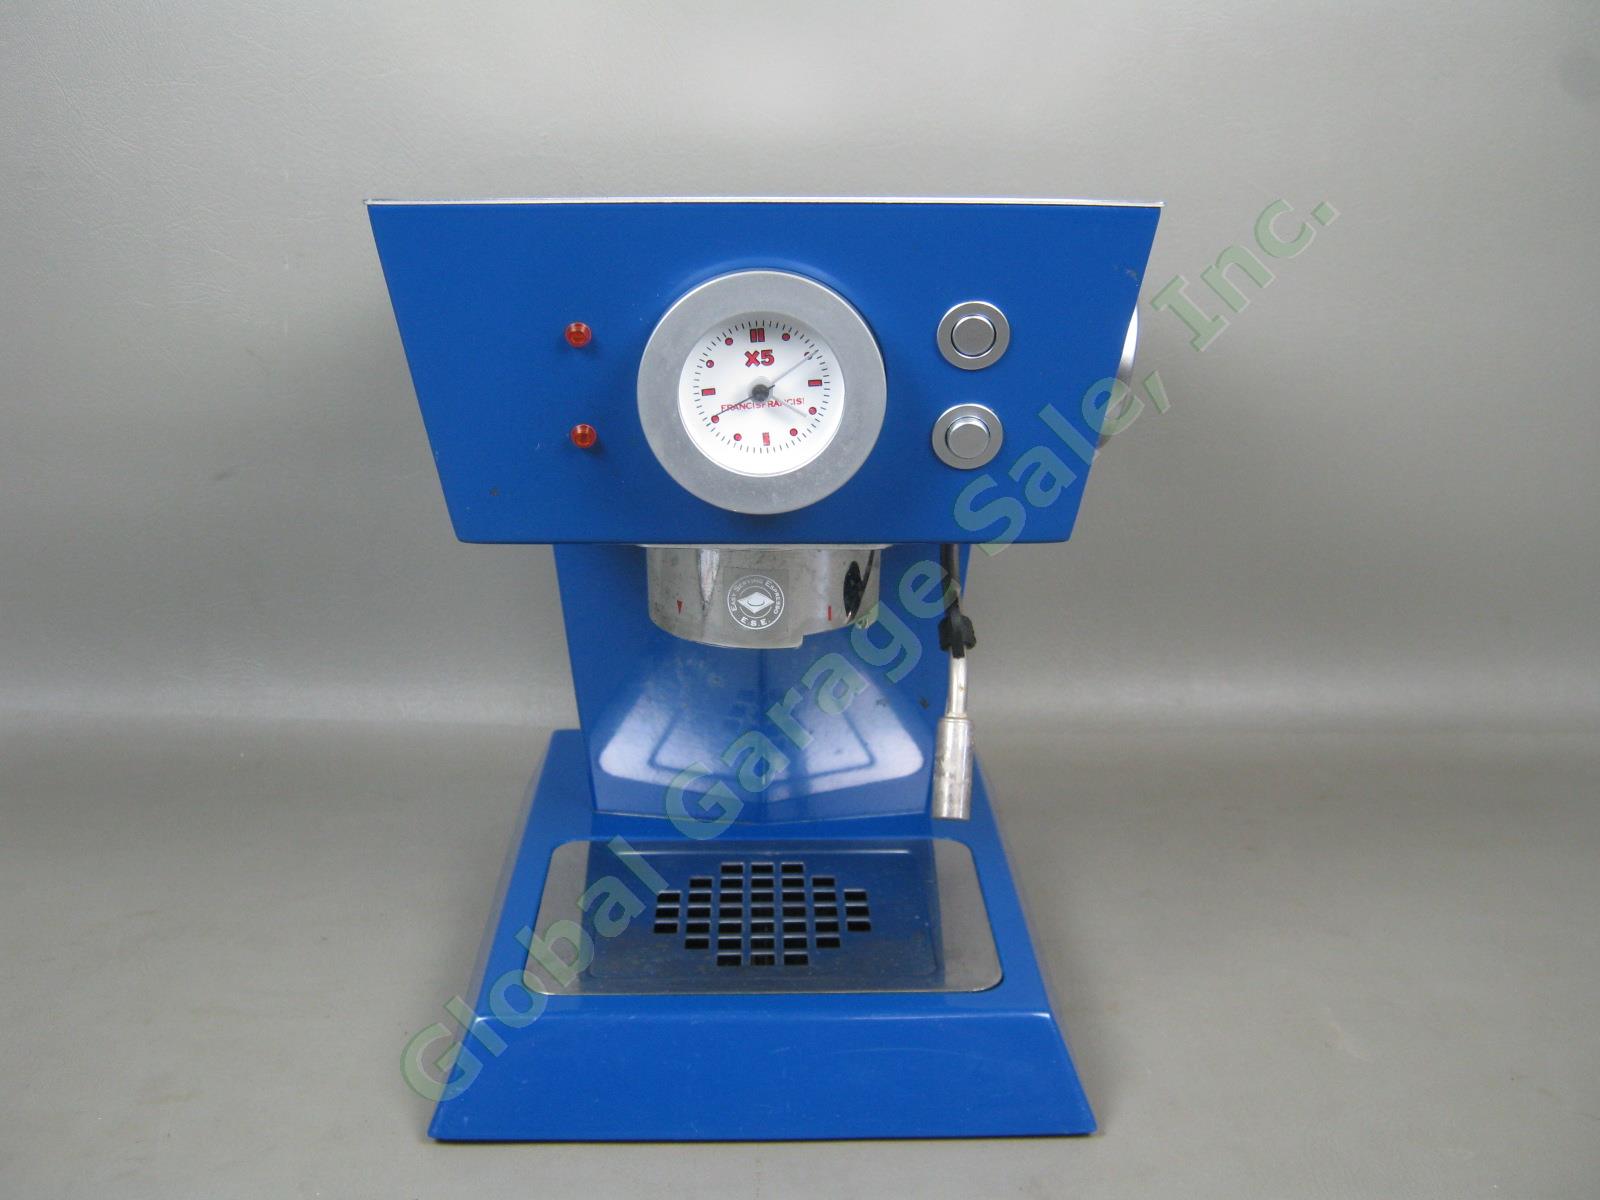 Royal Blue Francis X5 Espresso Maker Machine Tested Works Luca Trazzi Design NR! 1